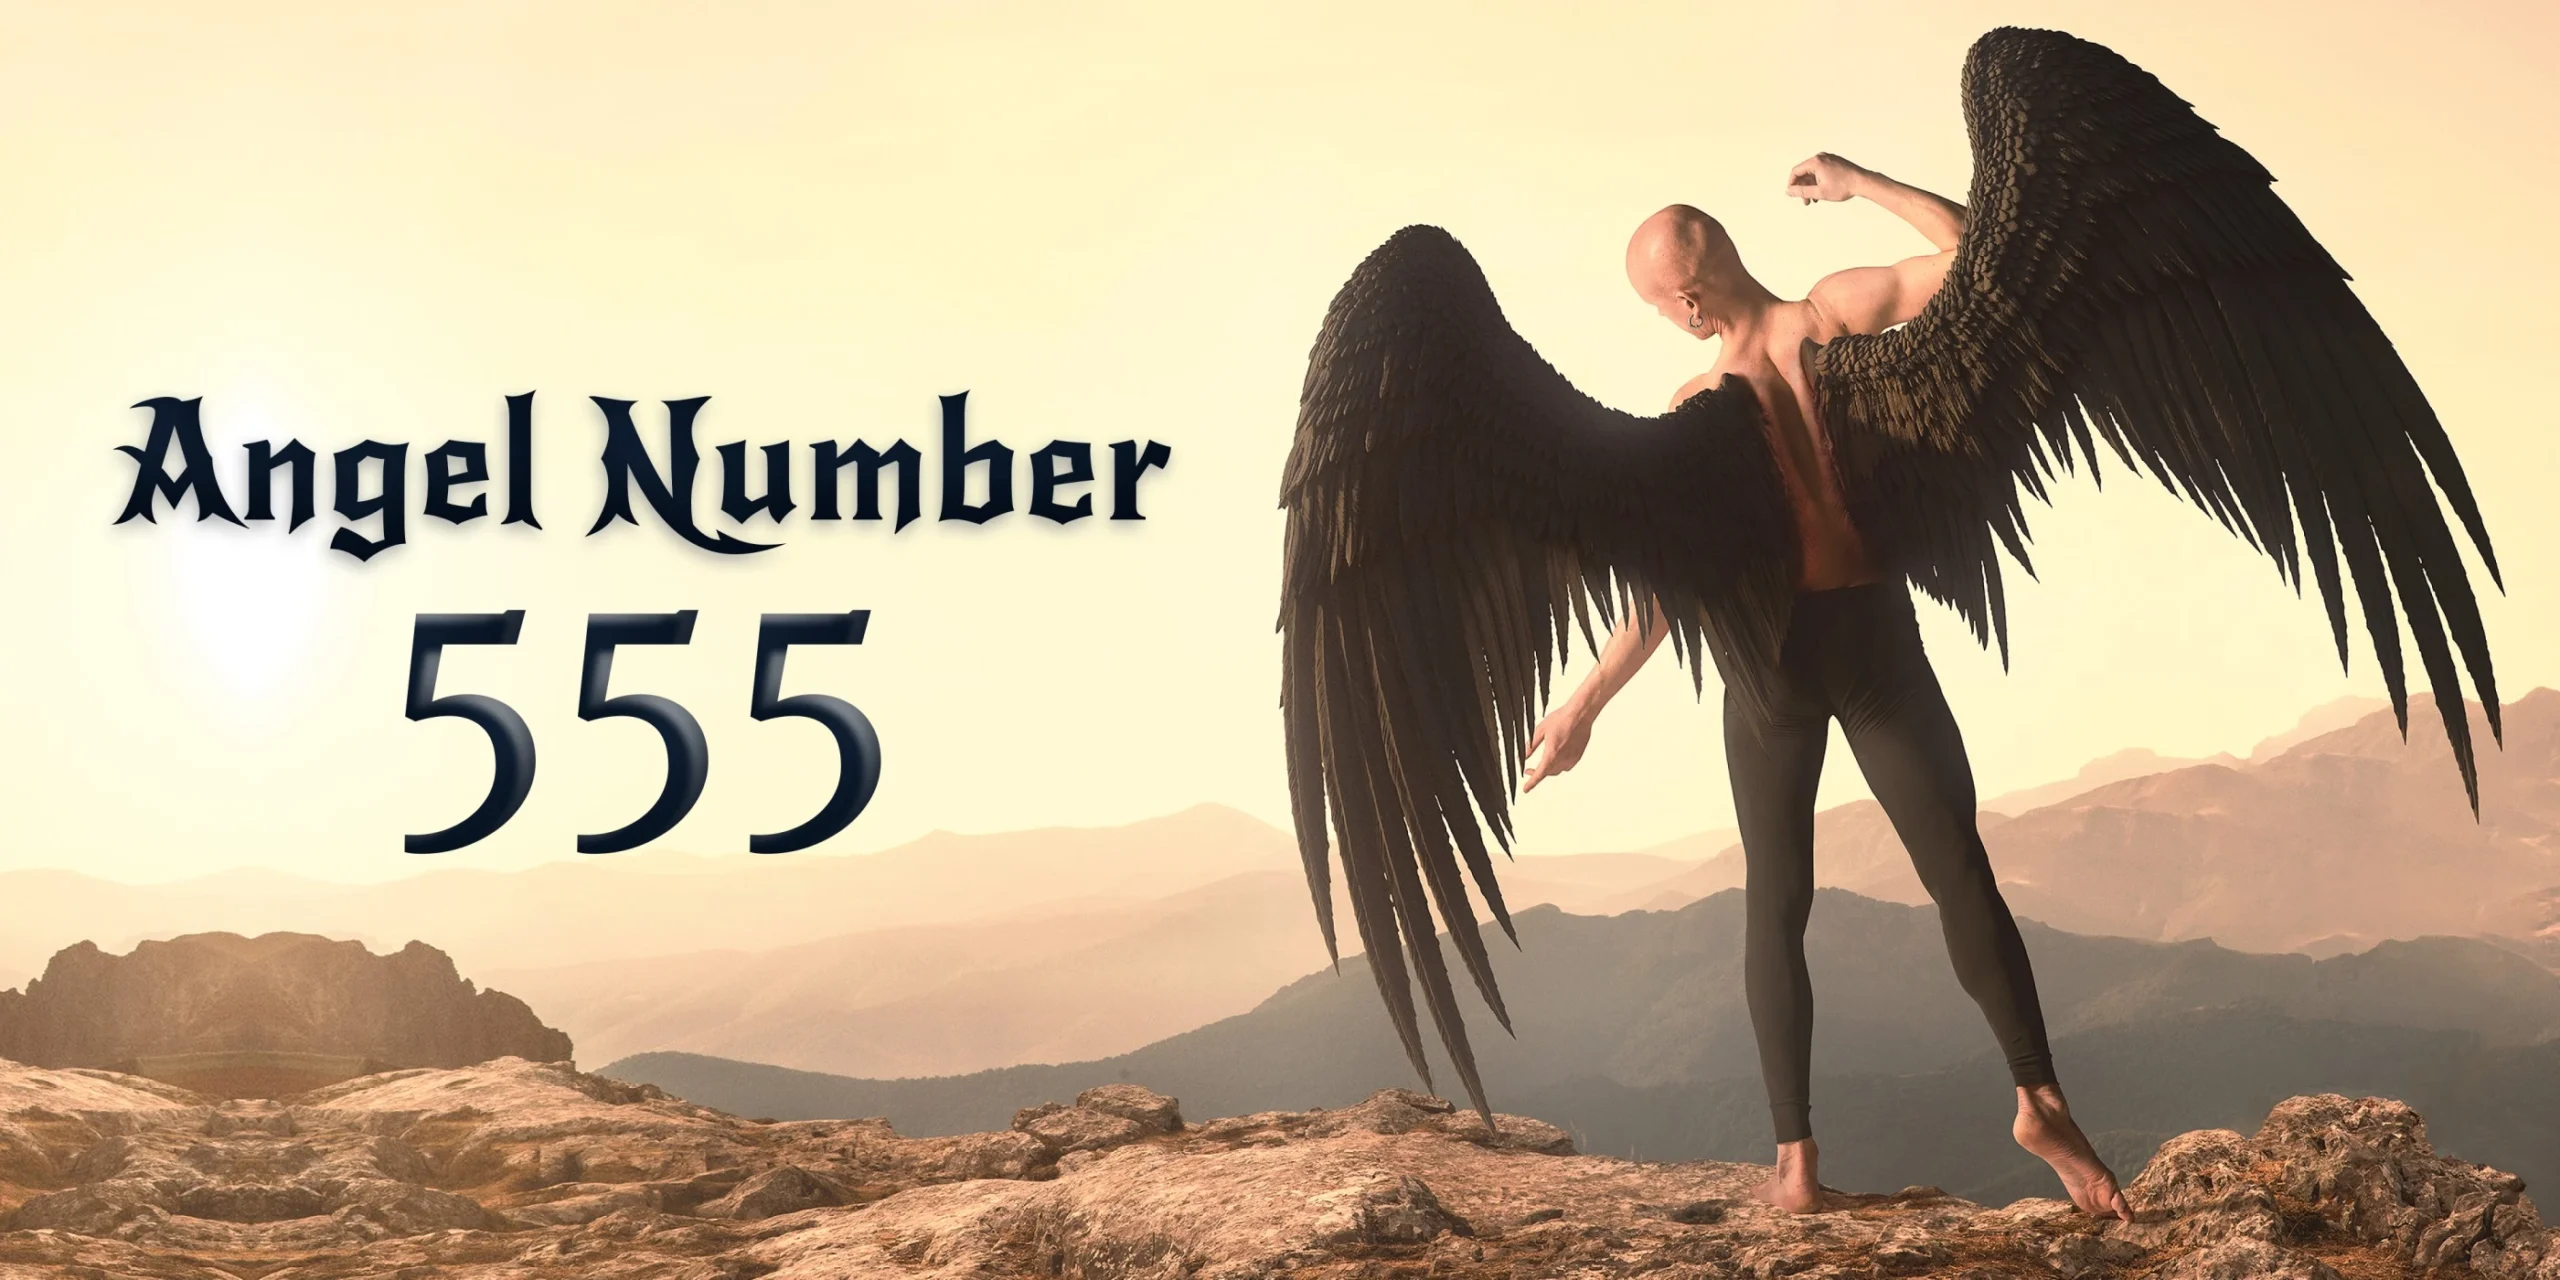 A Spiritual Interpretation of the Angel Number 555 and symbolism